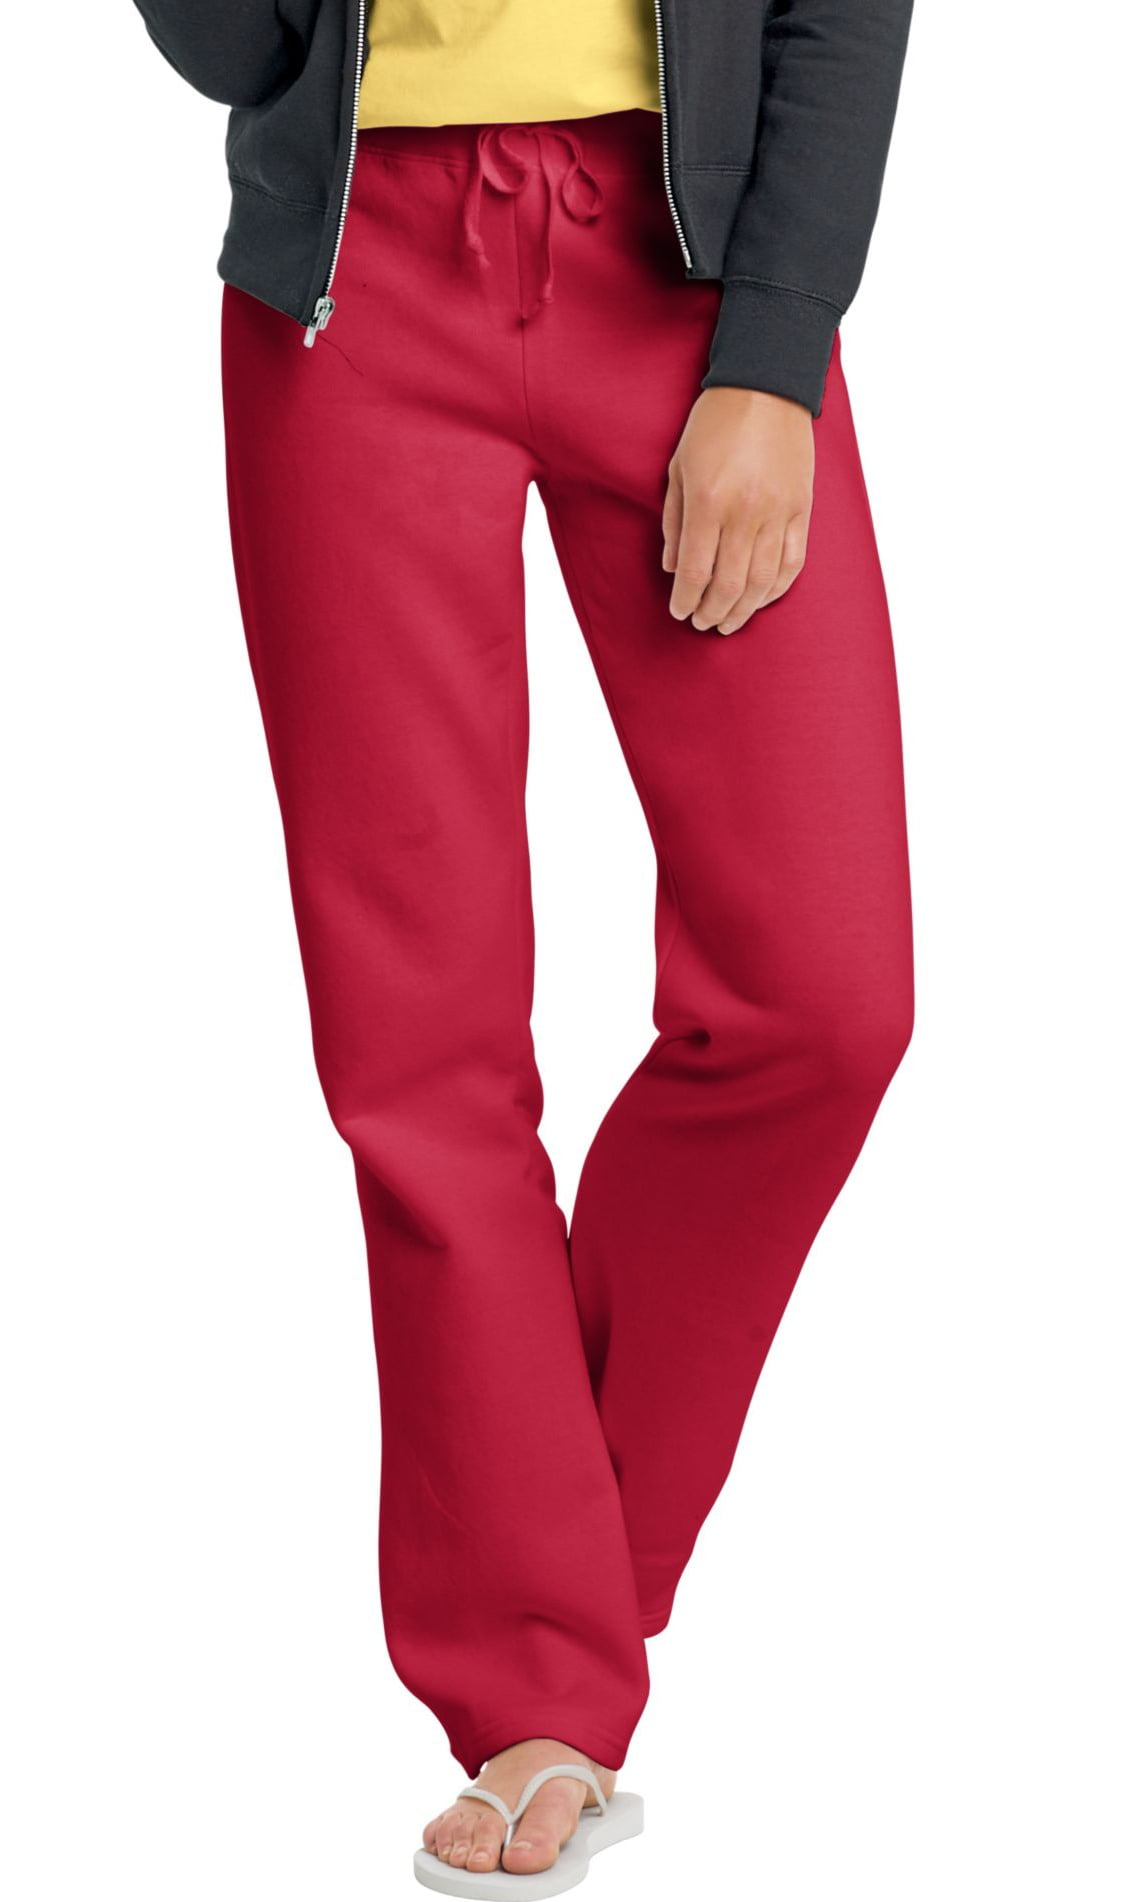 Hanes - Hanes Women's Drawstring Sweatpants Size Medium, Deep Red